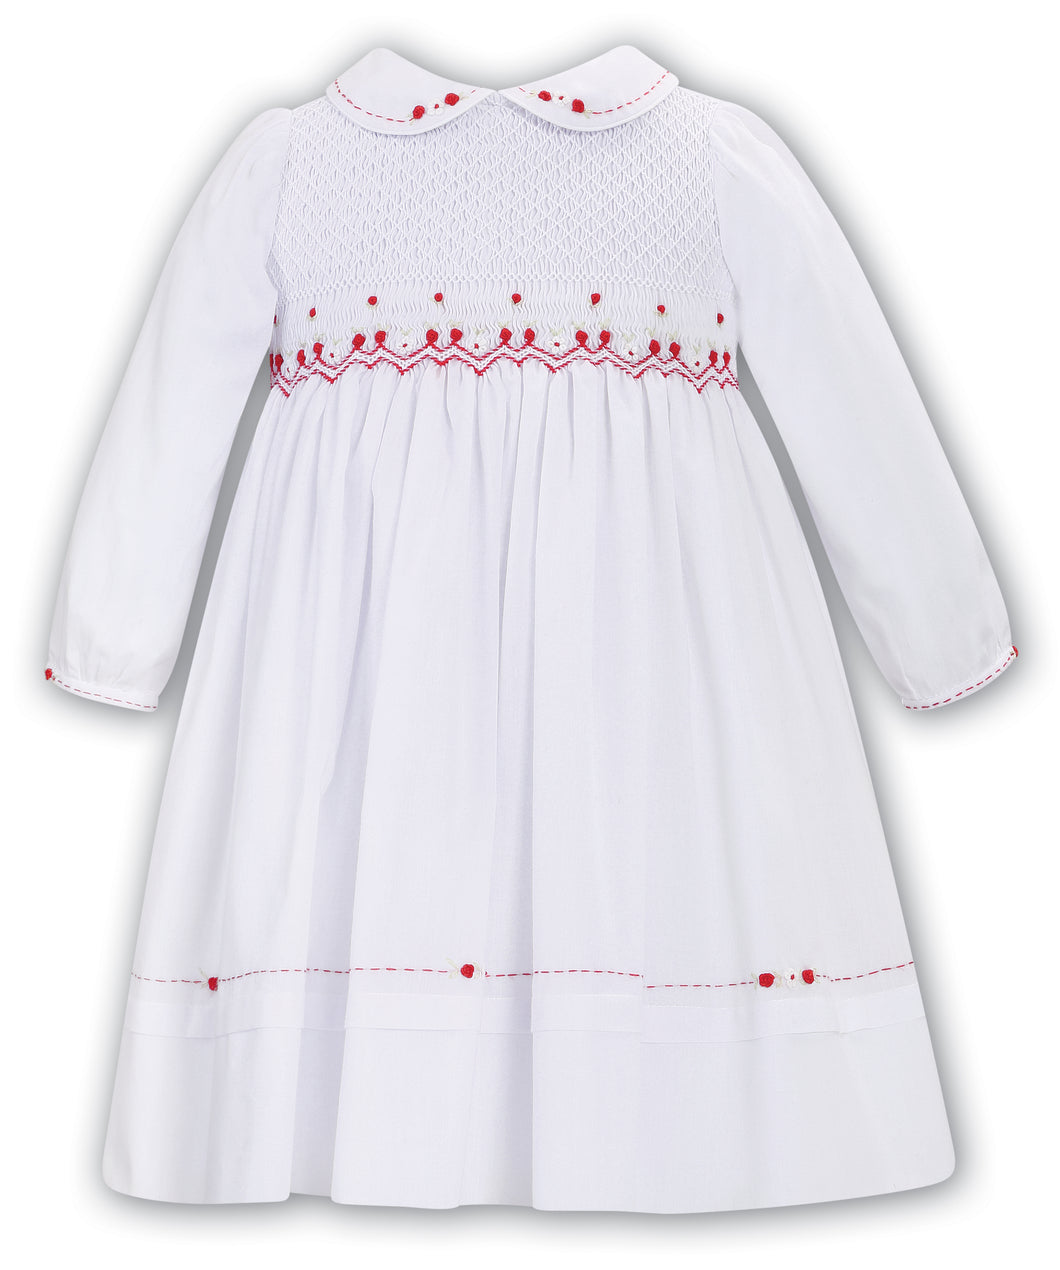 NEW AW23 Sarah Louise Smocked Dress white/red 013028